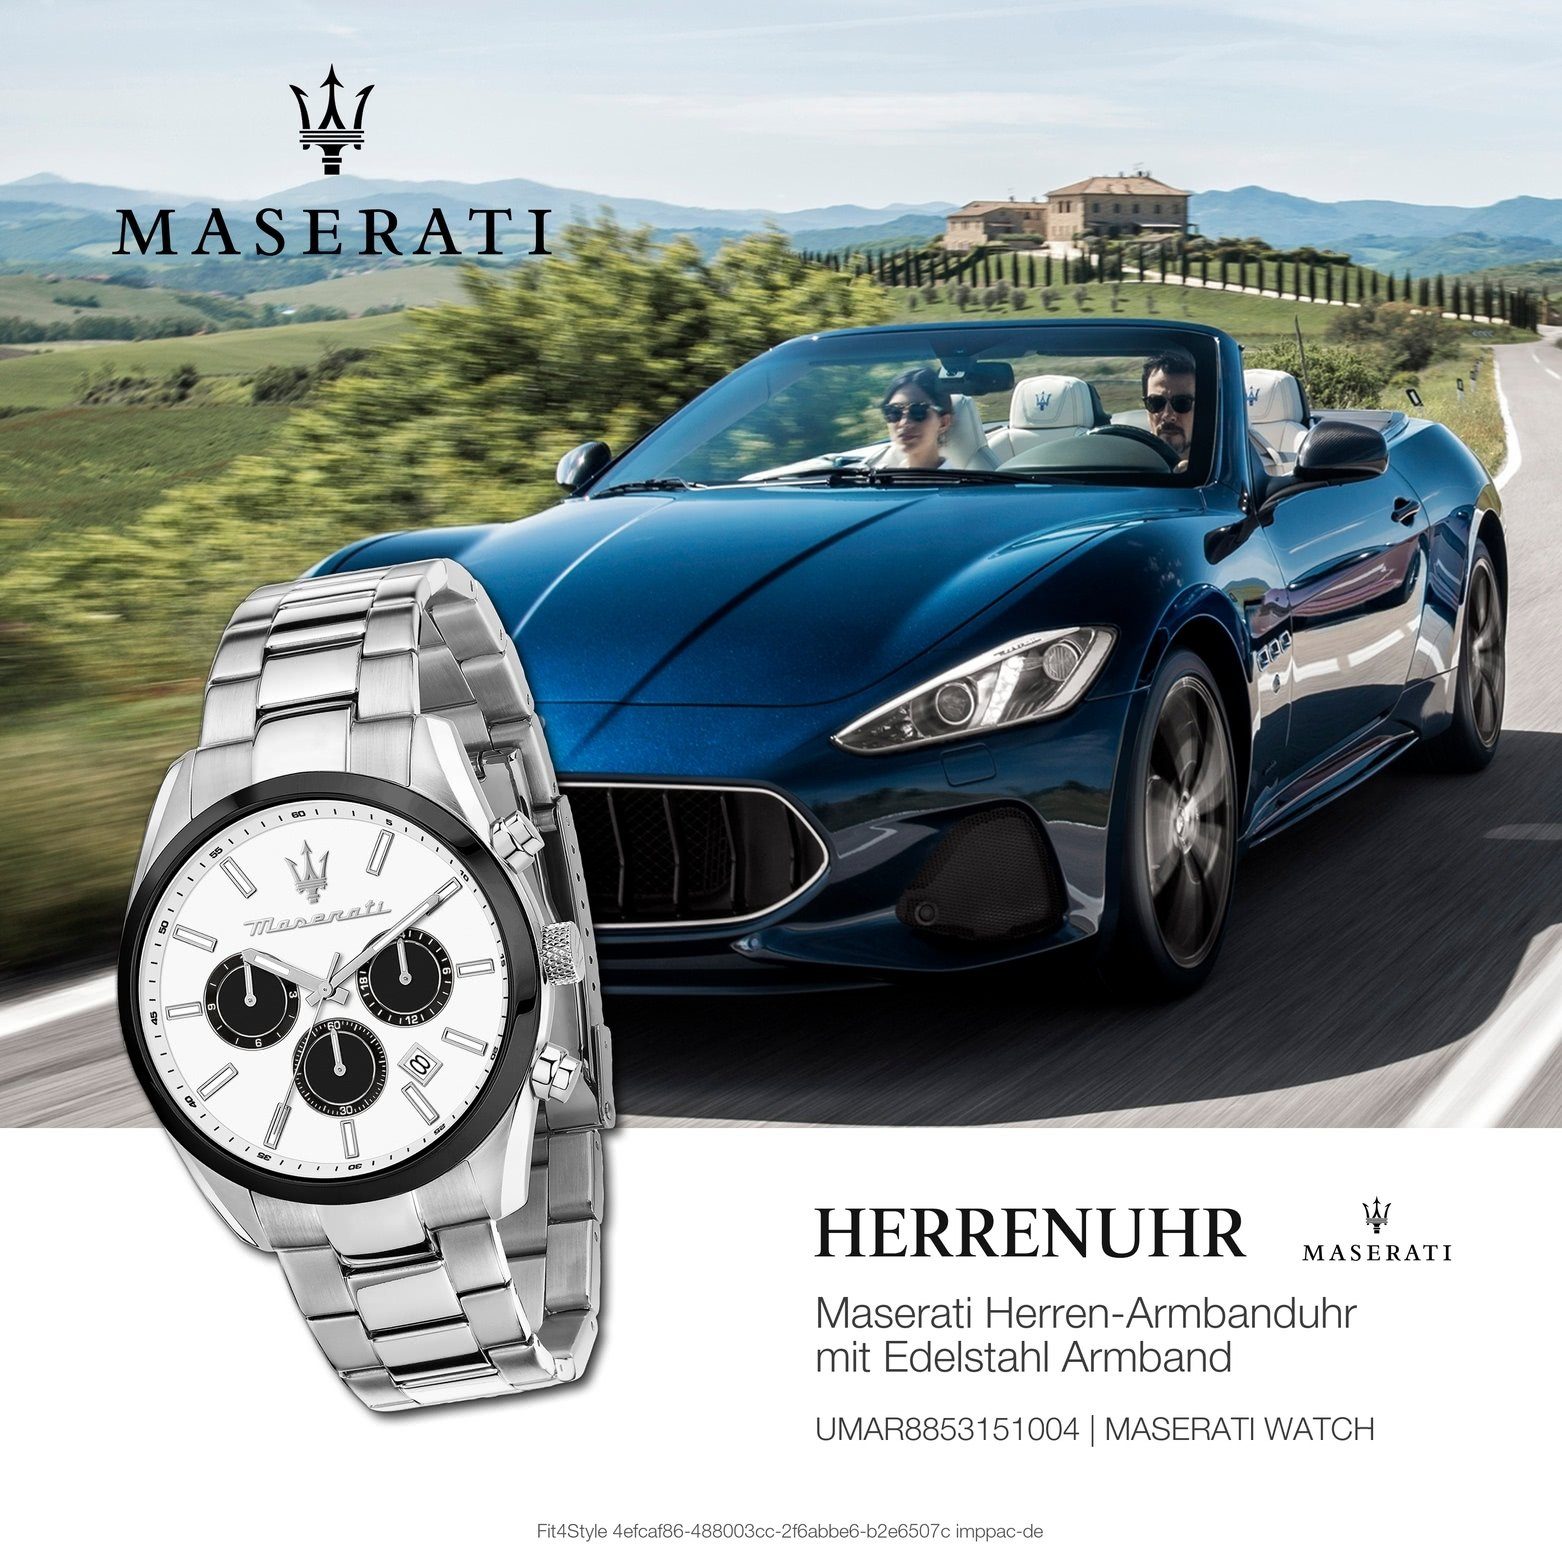 MASERATI Multifunktionsuhr Herrenuhr Maserati Italy groß Made-In 43mm) Edelstahlarmband, Attrazione, Maserati Time Herrenuhr (ca. rund,